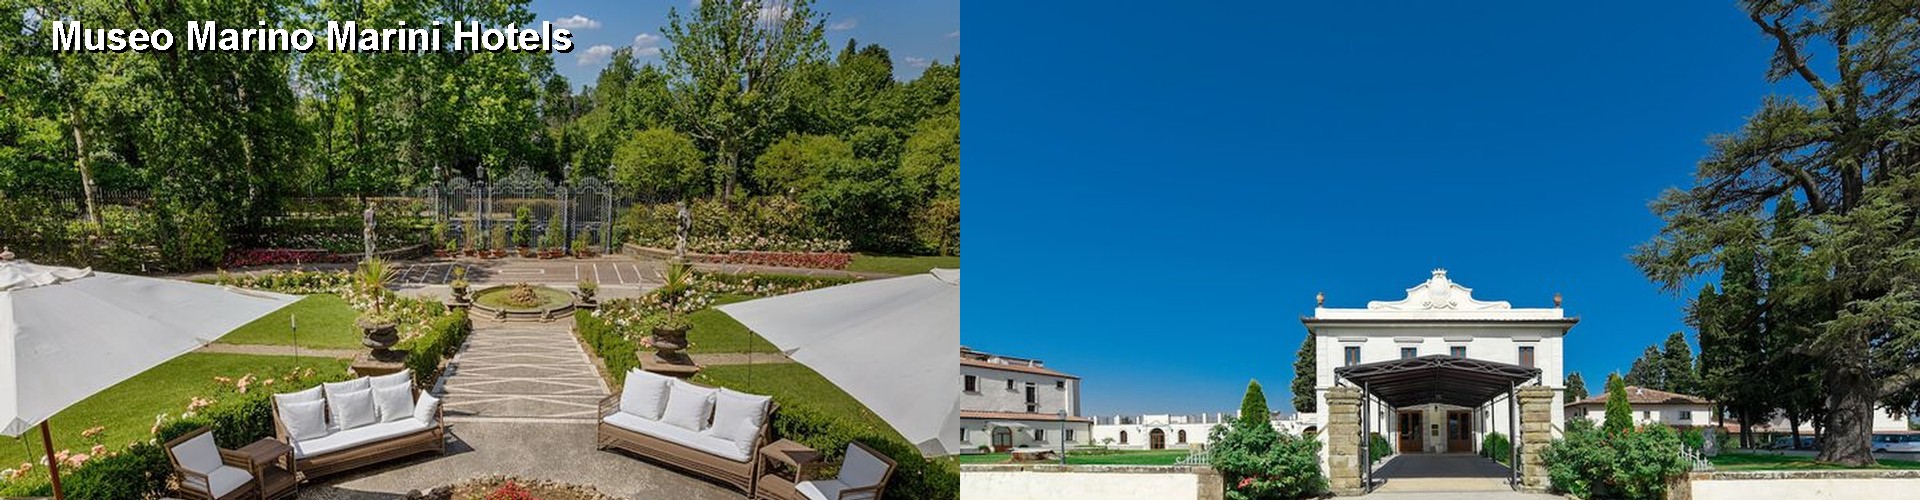 5 Best Hotels near Museo Marino Marini